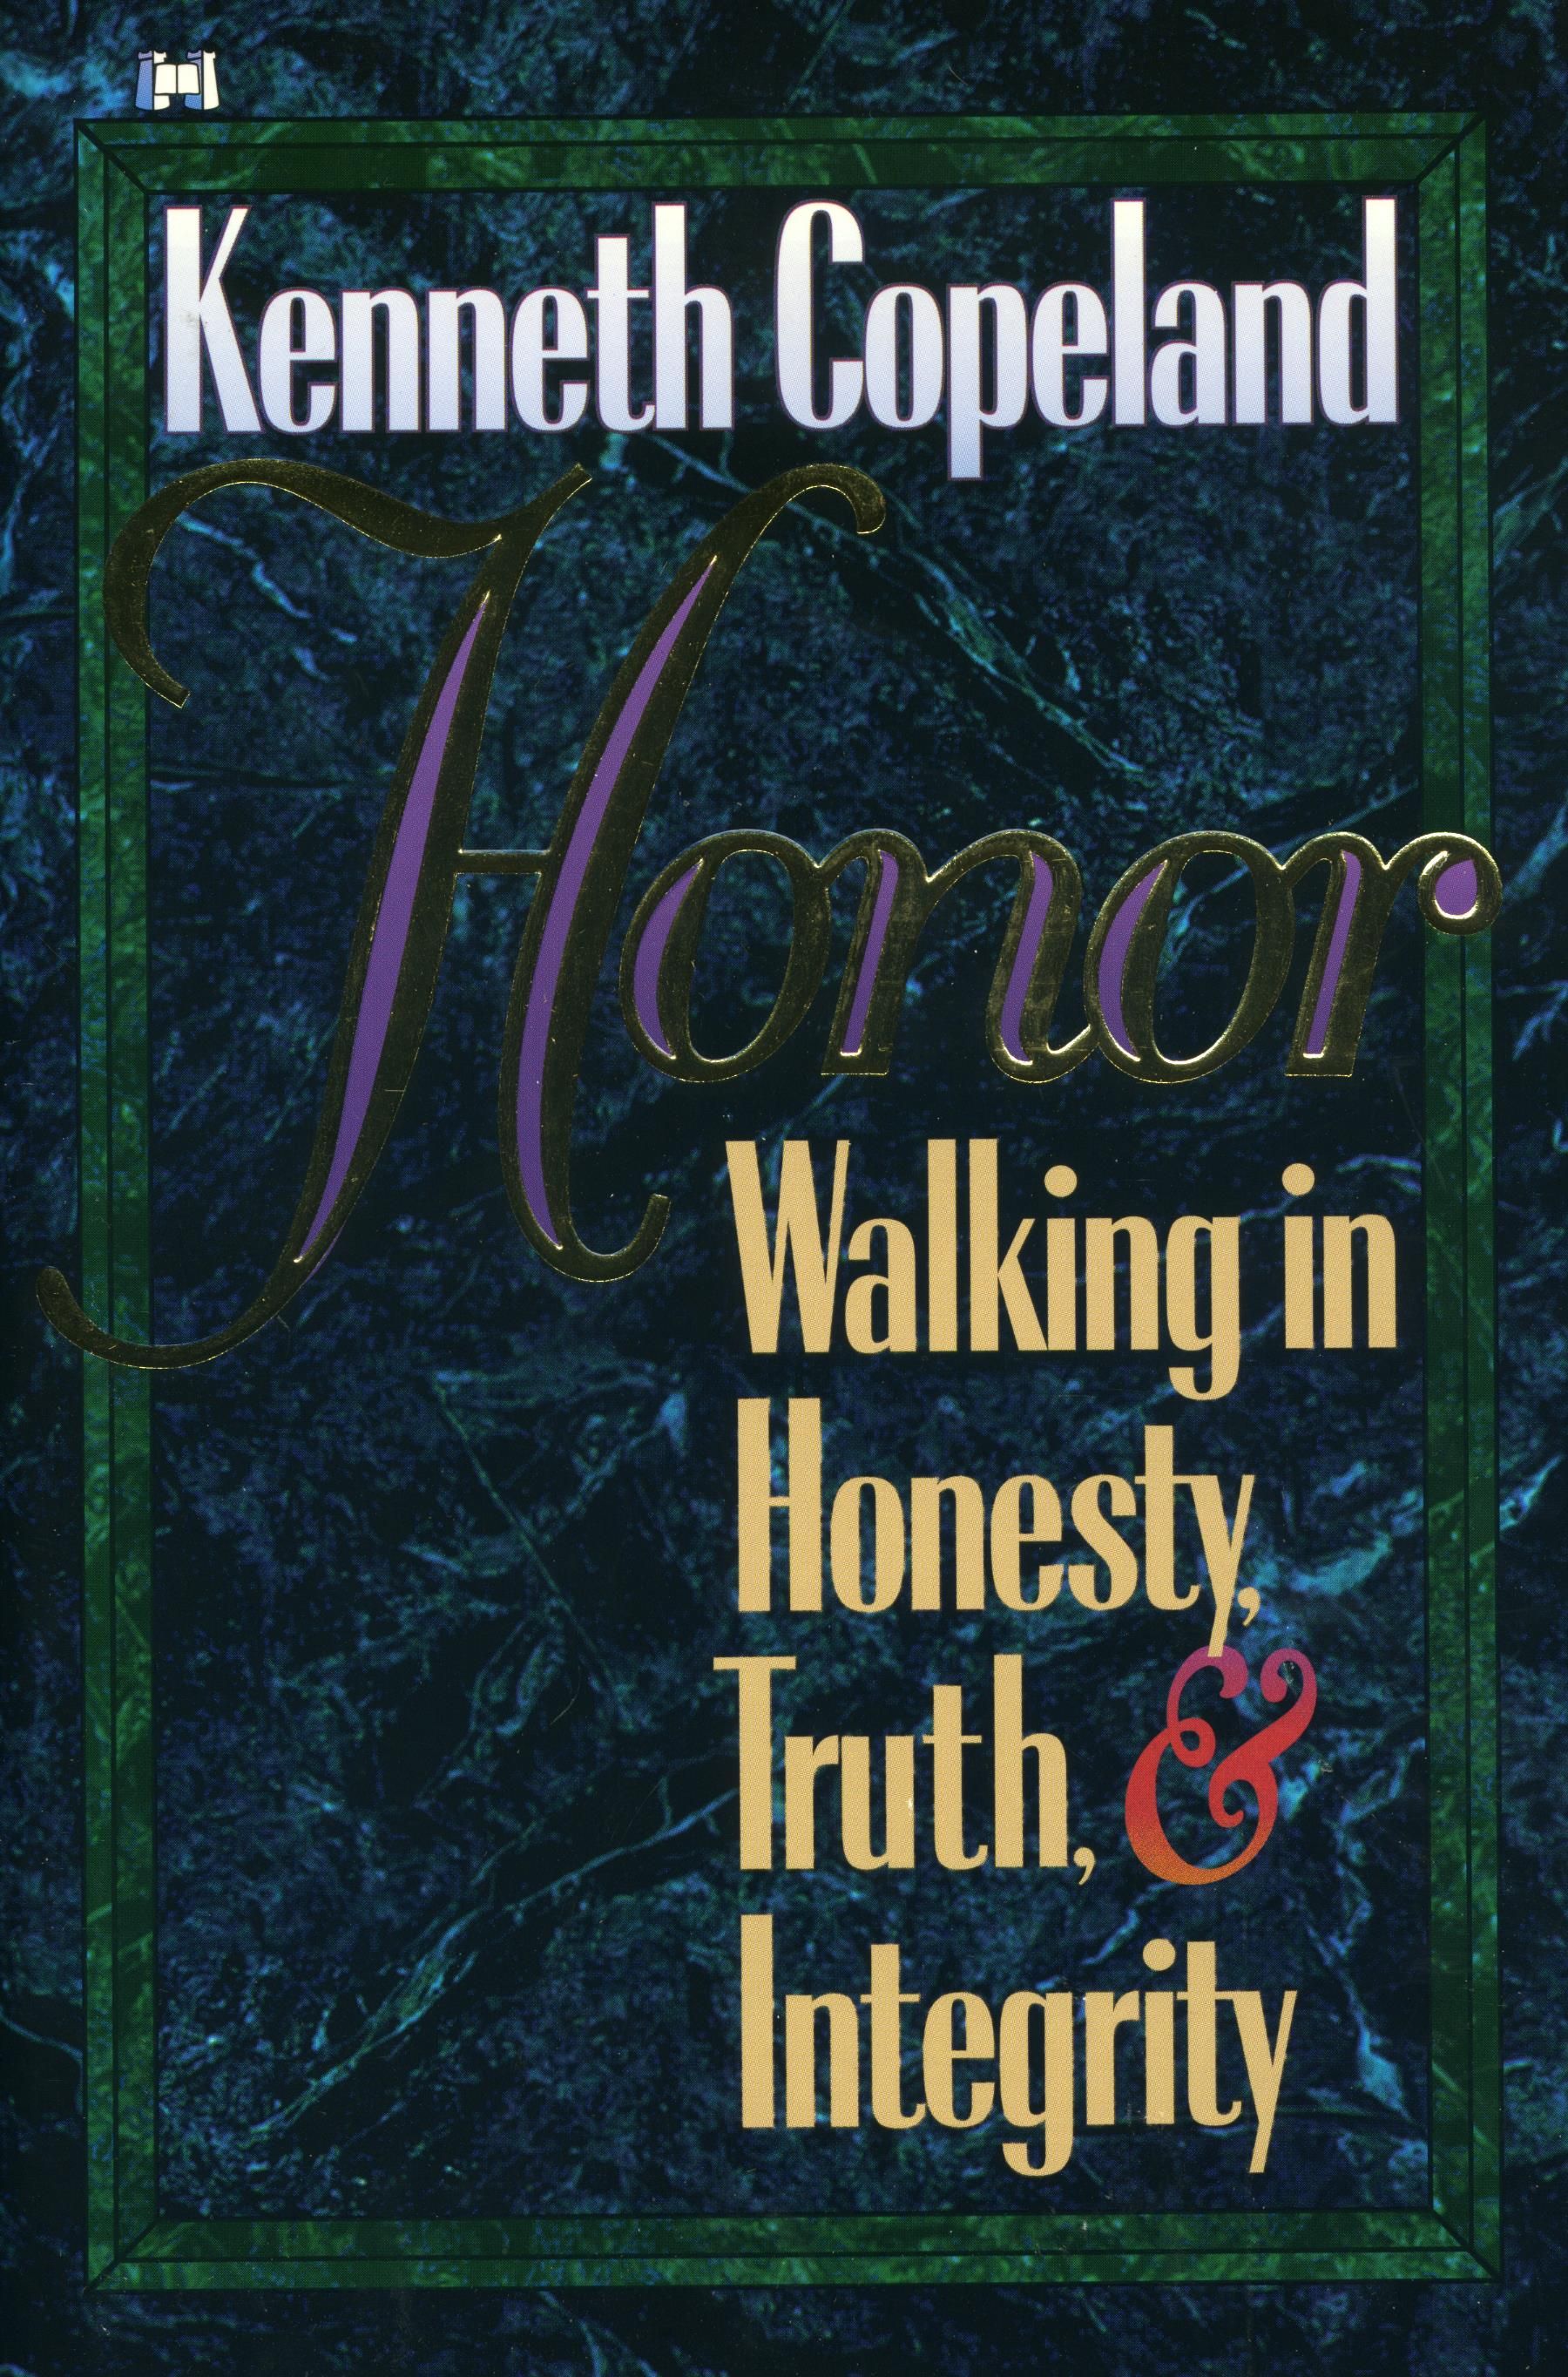 K. Copeland: Honor-Walking in Honestry, Truth & Integrity (Paperback)